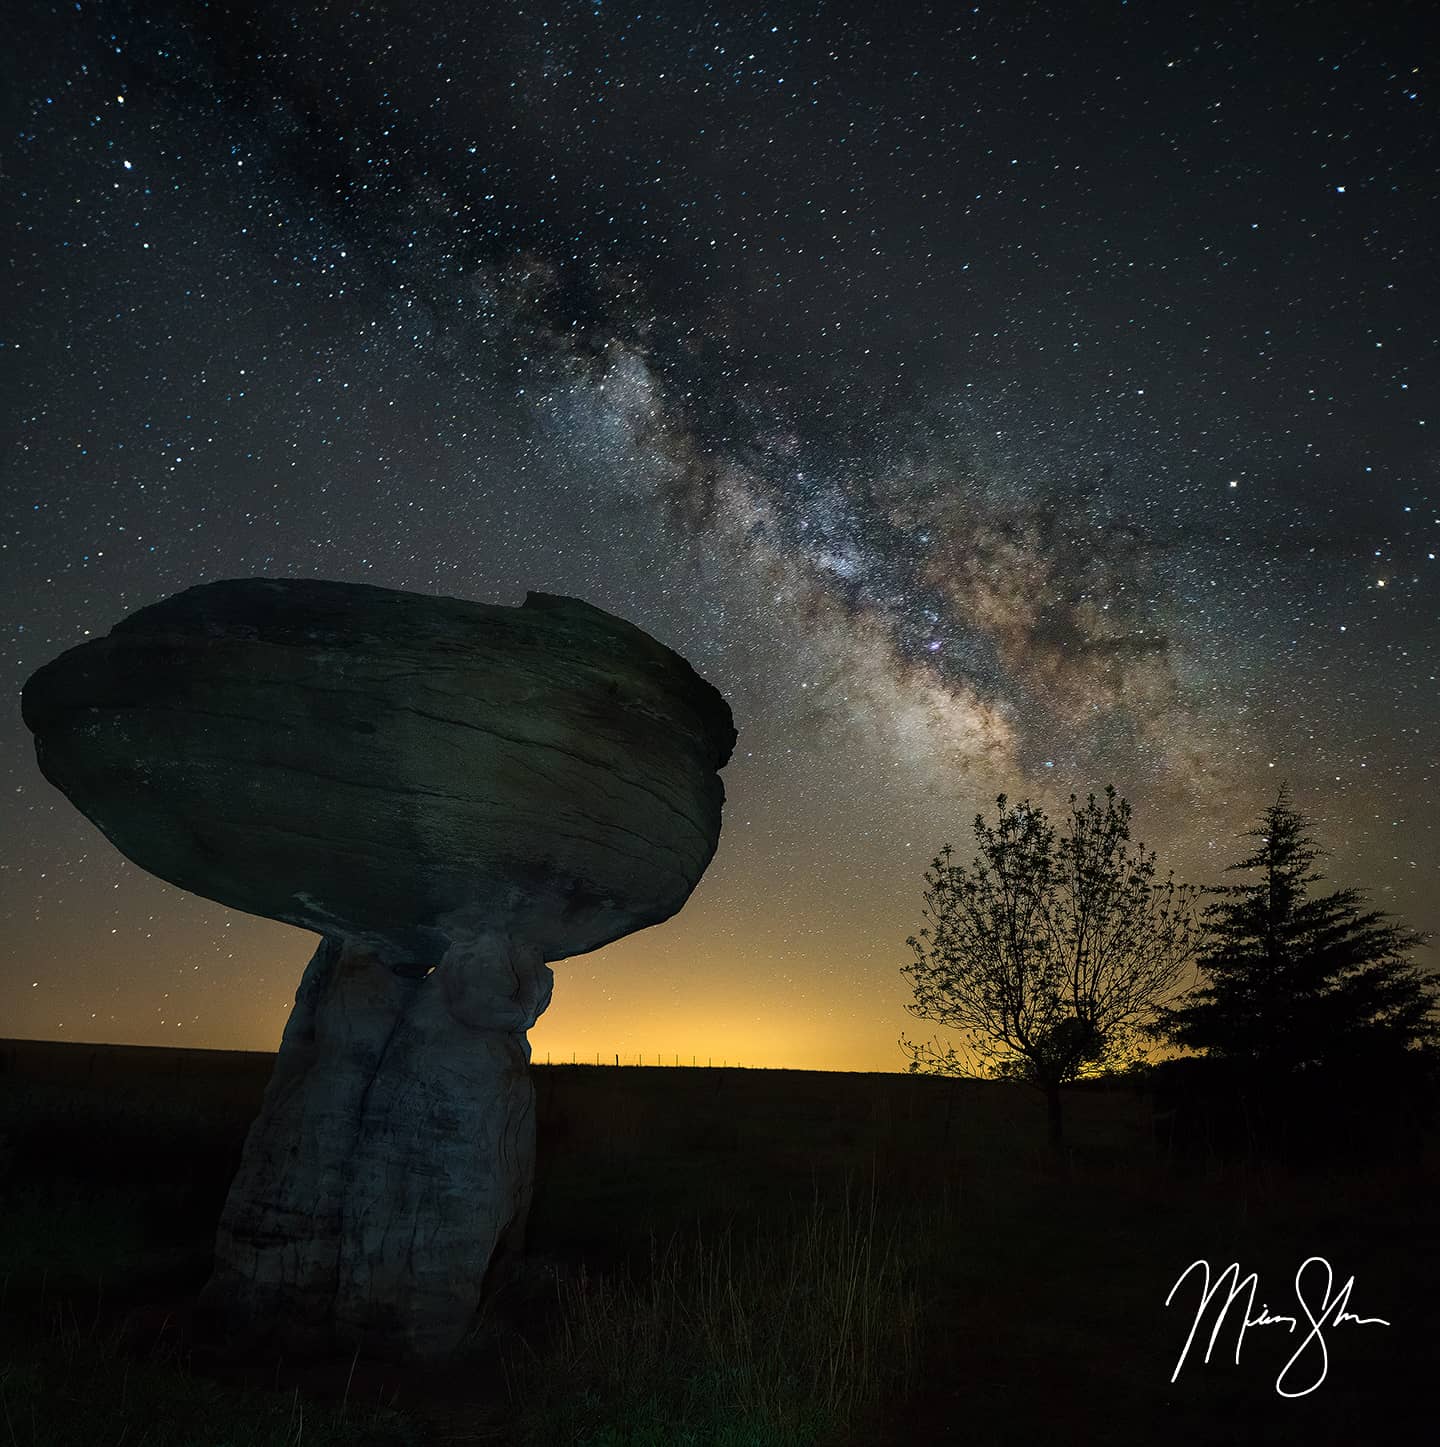 Mushroom Rock Milky Way - Mushroom Rock State Park, Kansas